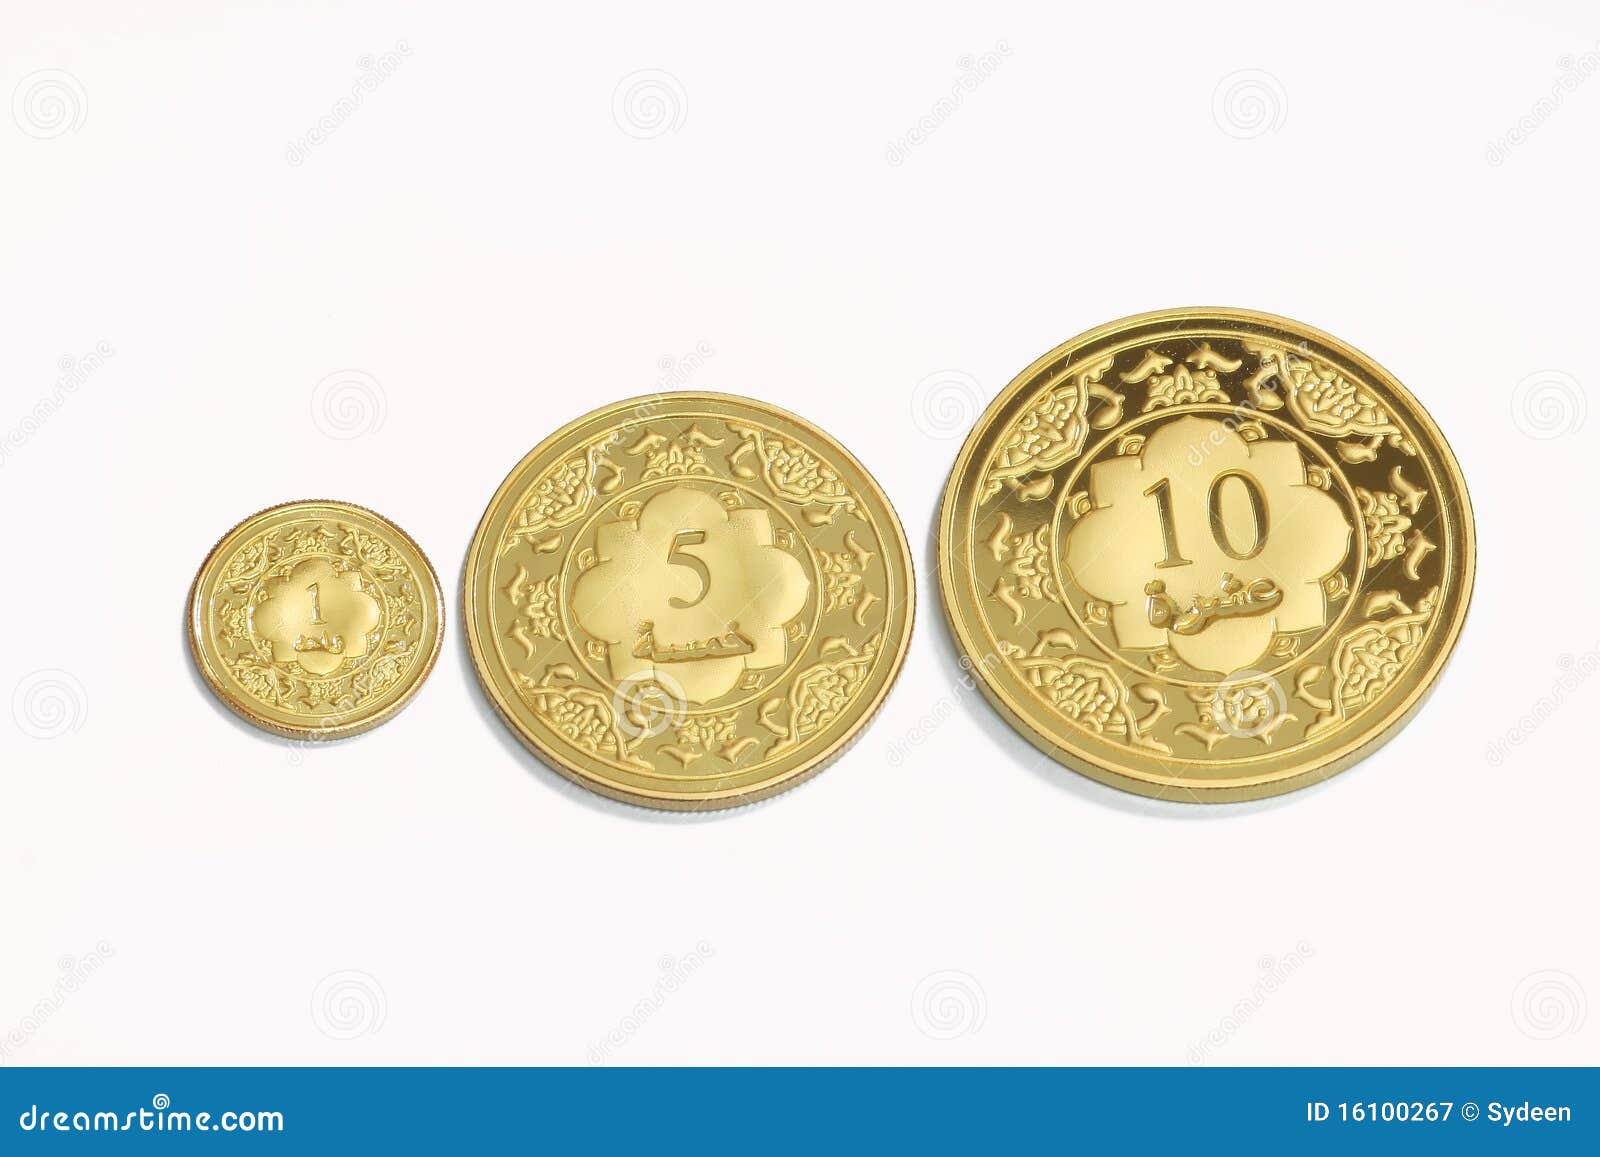 gold islamic dinar